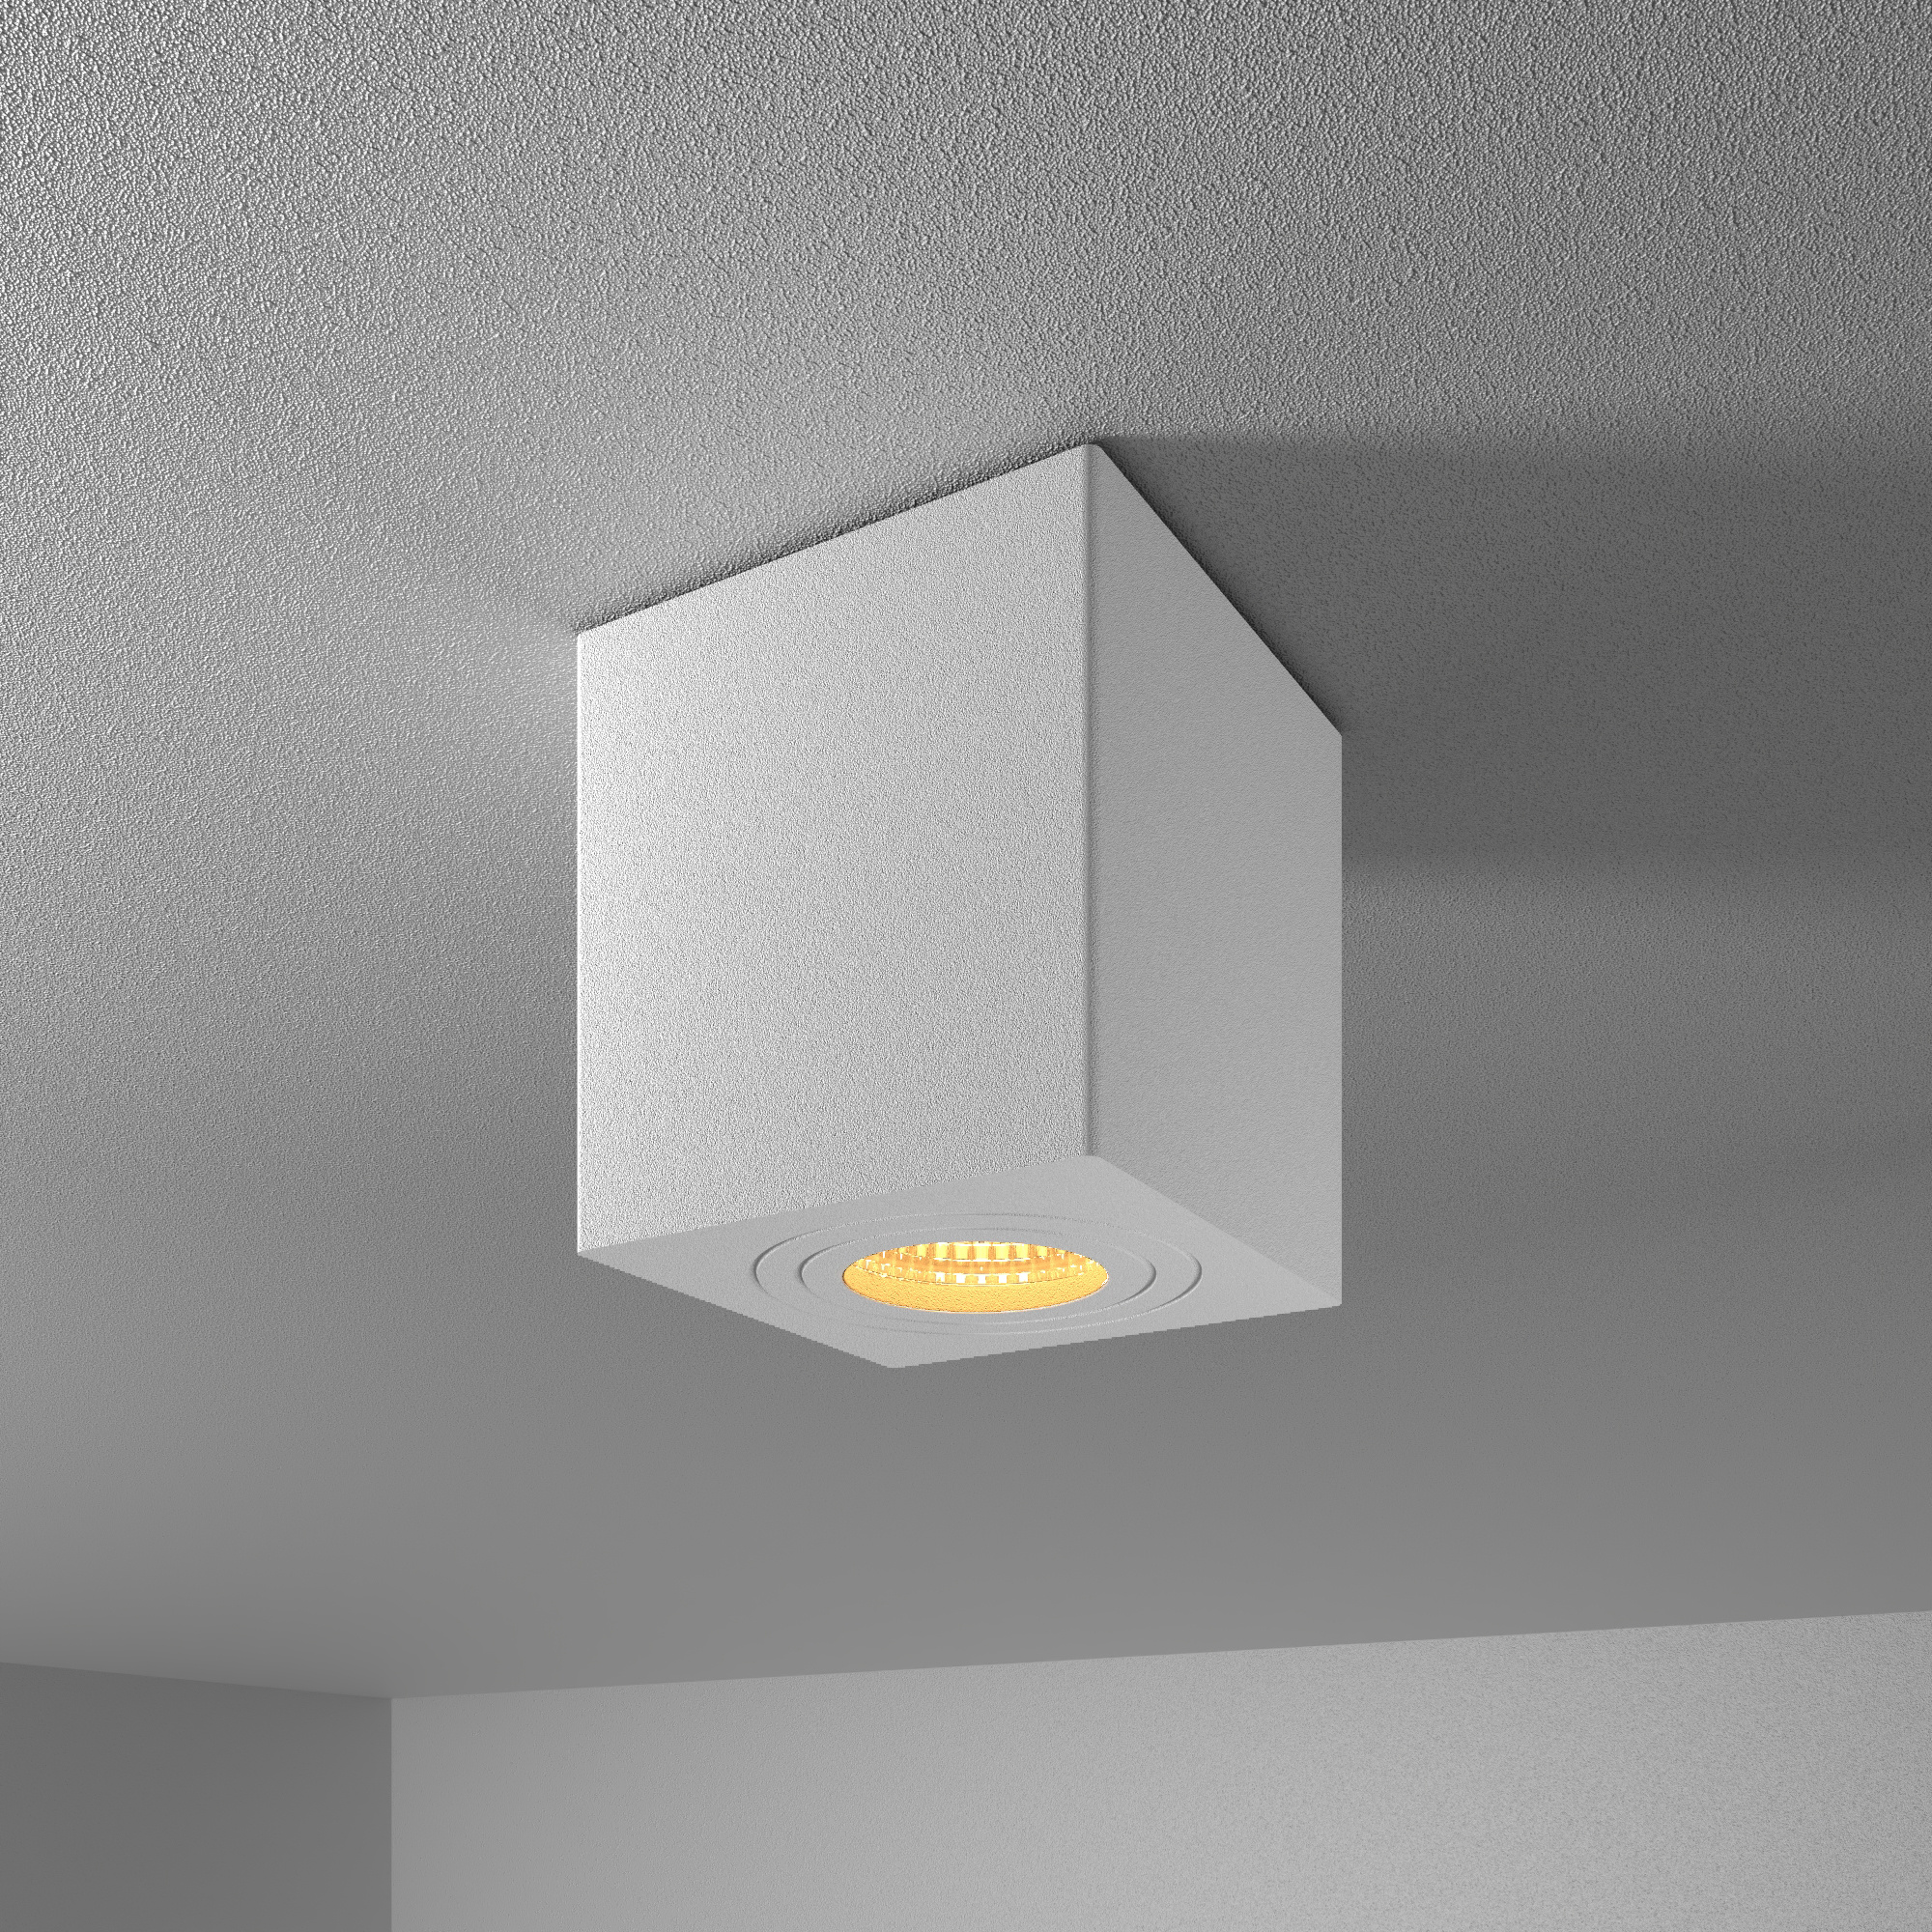 HOFTRONIC™ Gibbon LED opbouw plafondspot - Vierkant - IP65 waterdicht - 2700K Warm wit lichtkleur GU10 - Plafondlamp geschikt voor badkamer - Wit